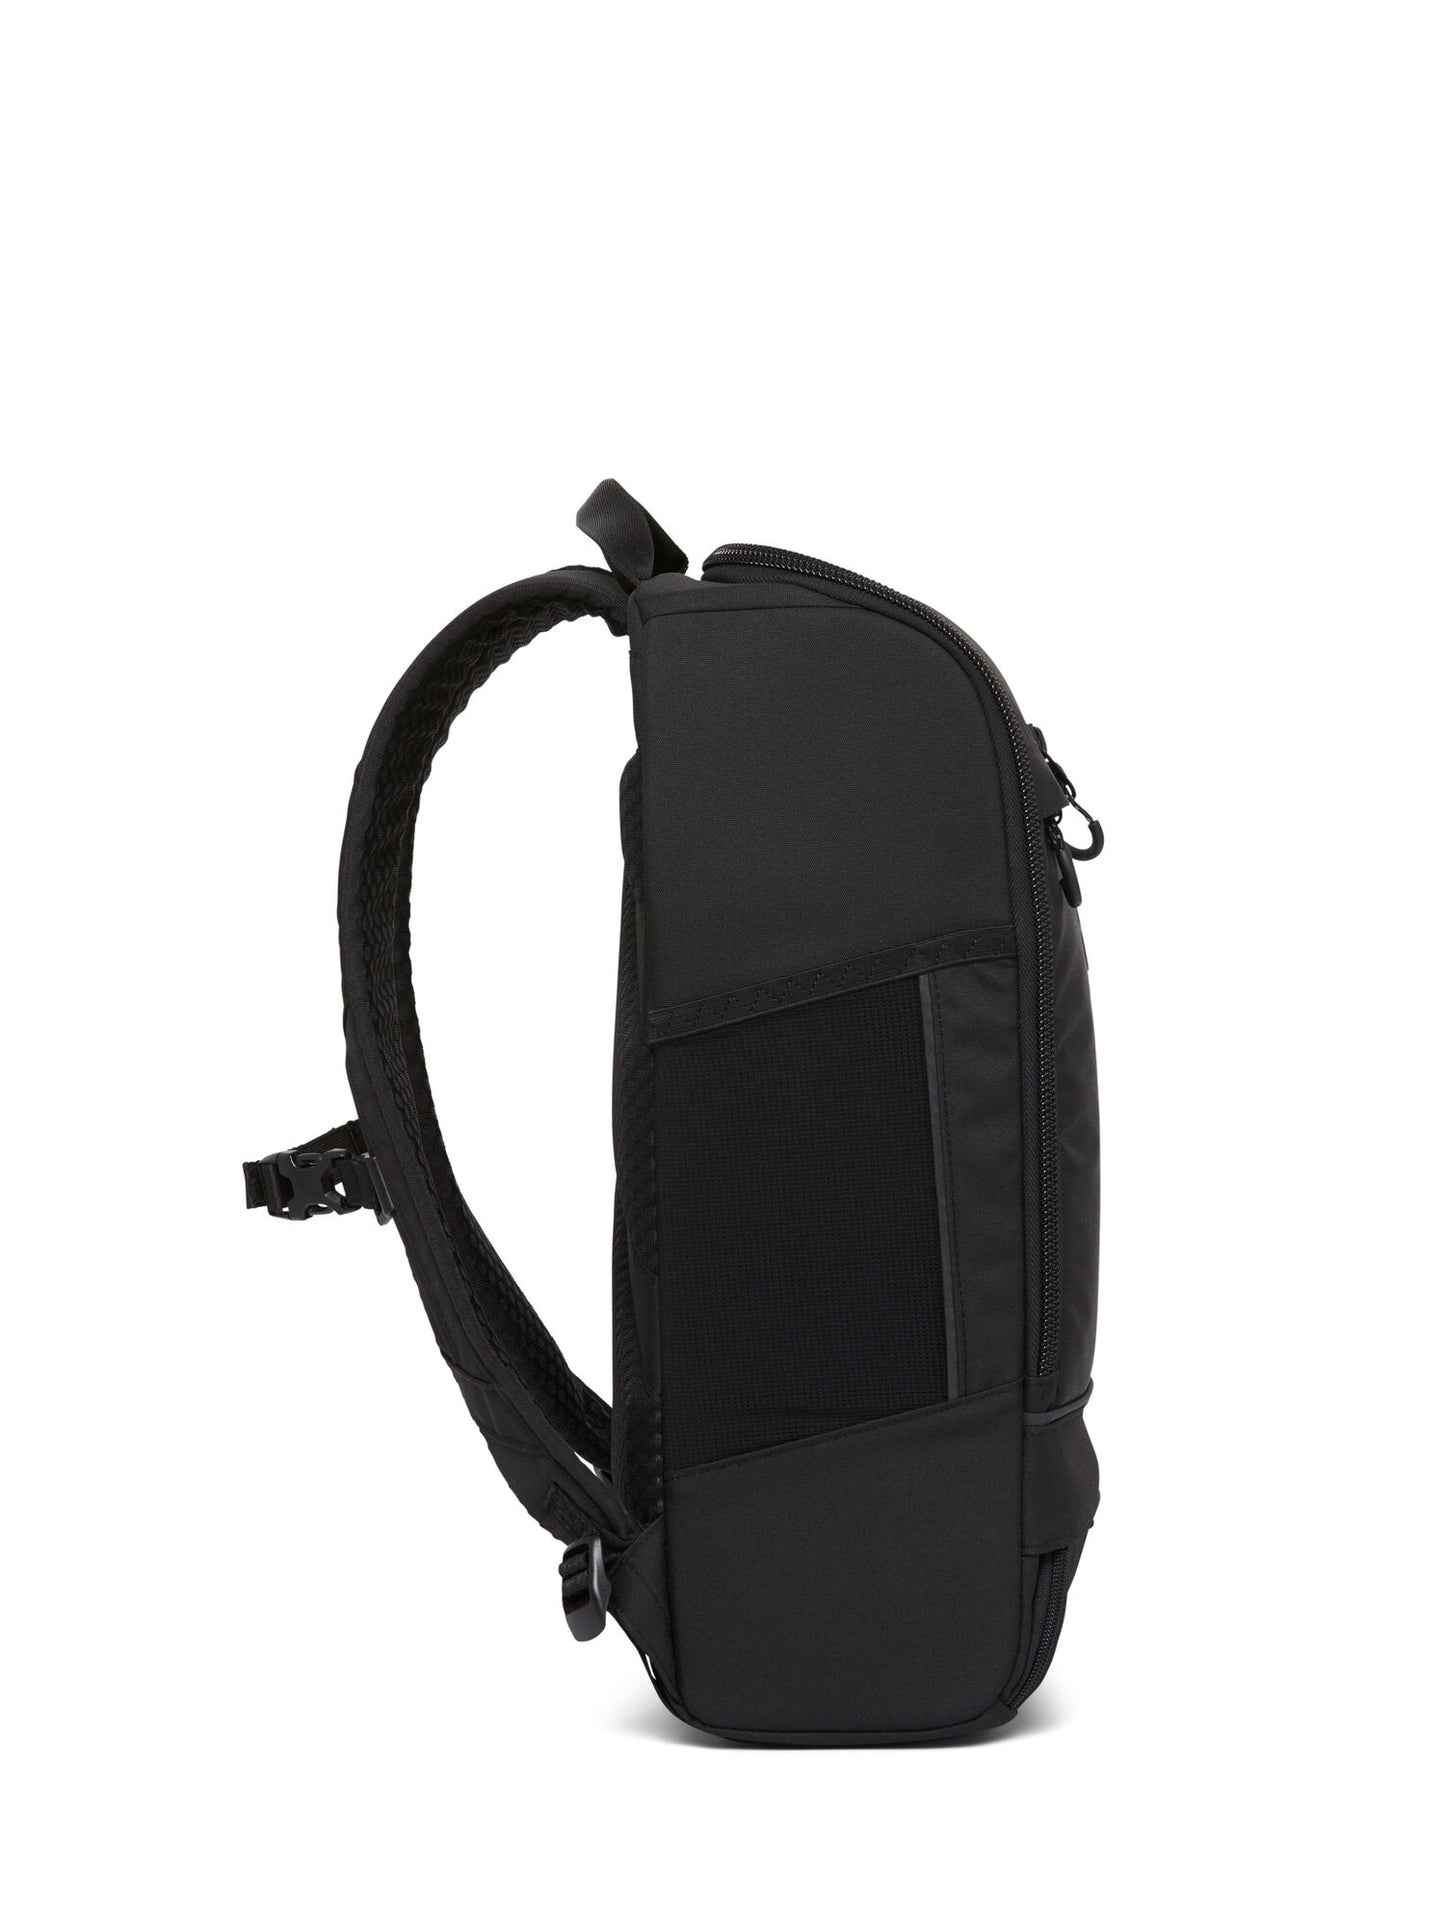 pinqponq-backpack-cubik-medium-rooted-black-side